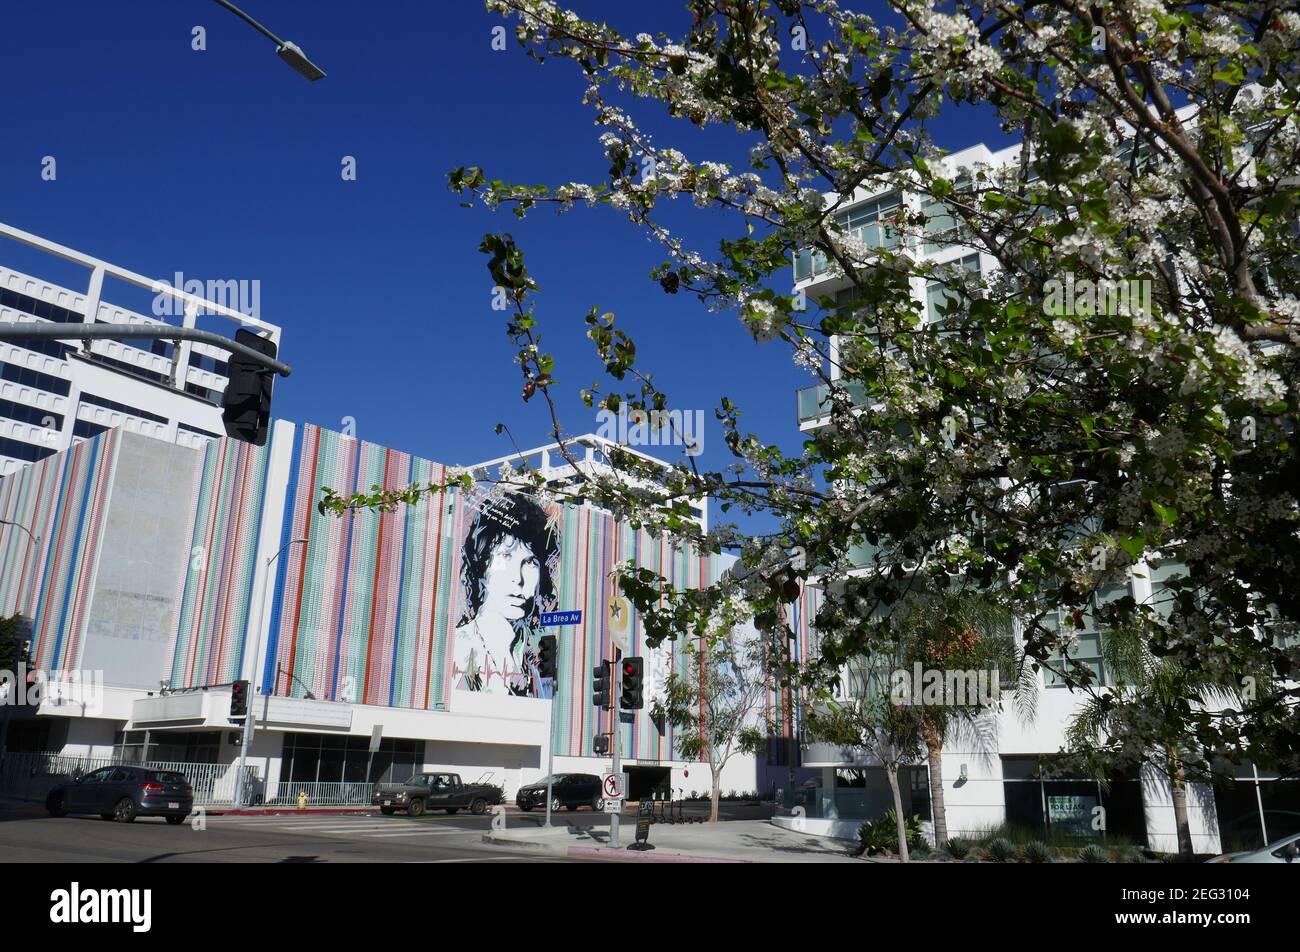 Hollywood, California, USA 17 febbraio 2021 UNA visione generale di Jim Morrison della Doors Mural Street Art il 17 febbraio 2021 a Hollywood, California, USA. Foto di Barry King/Alamy Stock foto Foto Stock